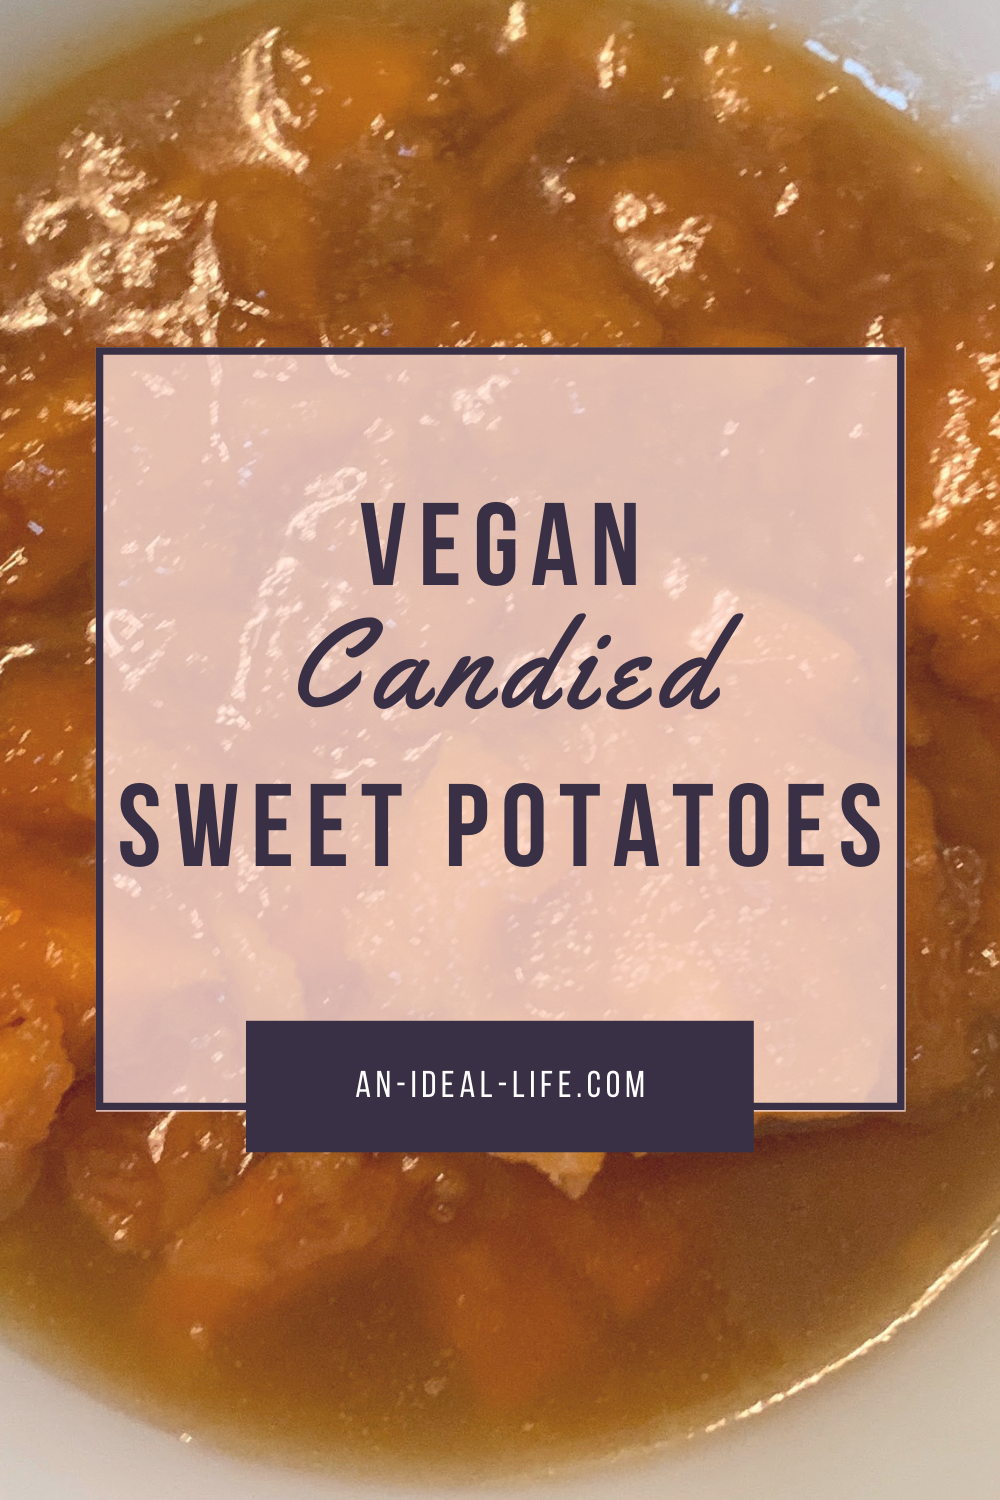 Vegan Candied Sweet Potatoes